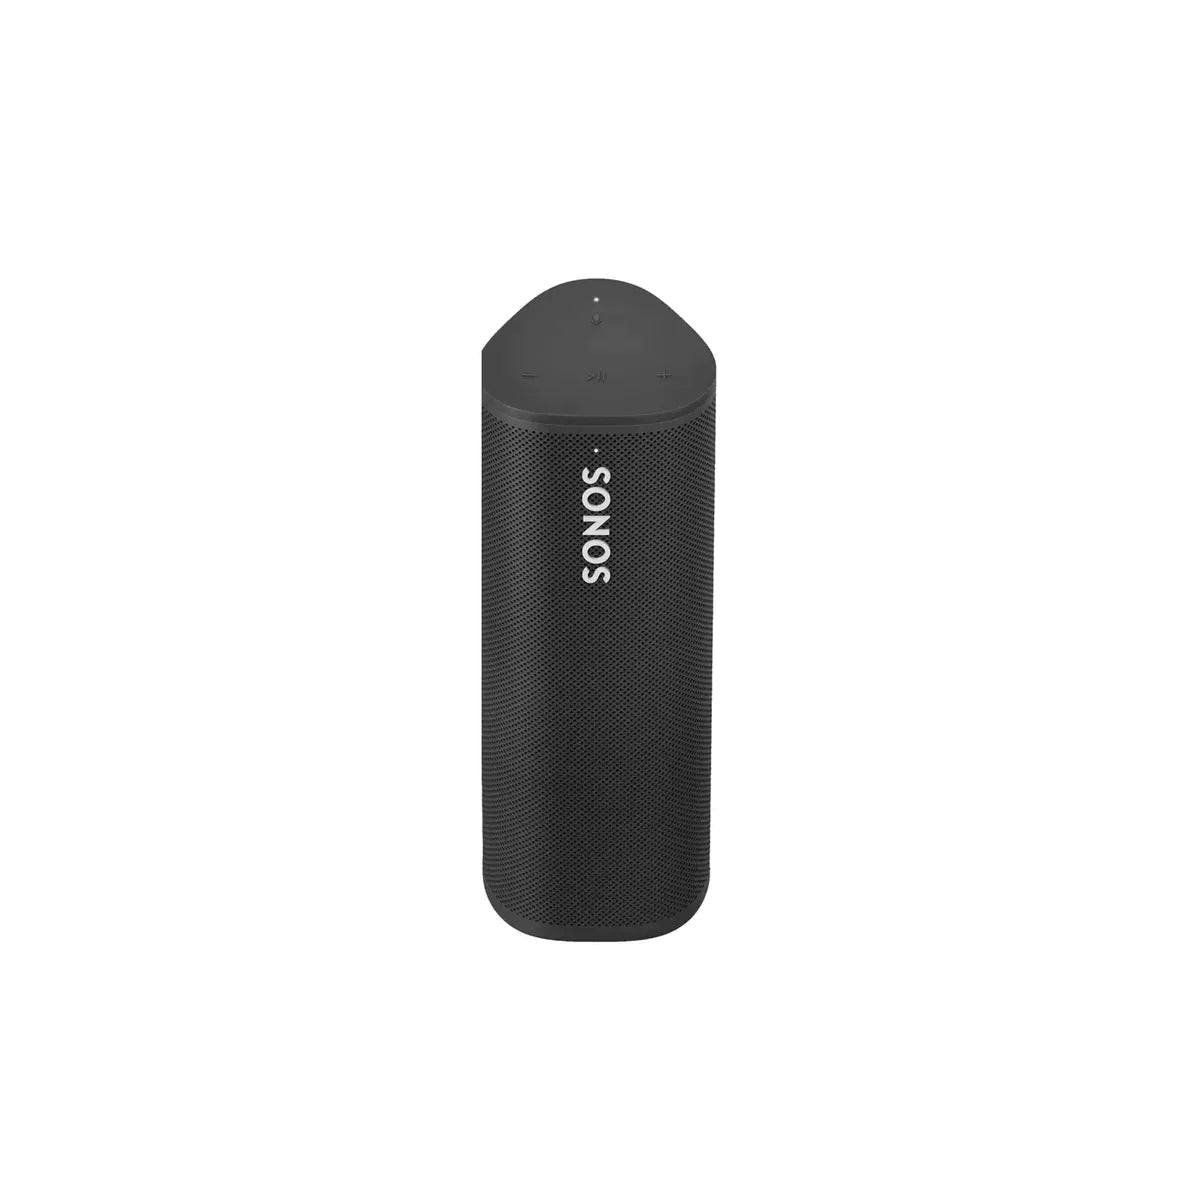 Sonos Roam Smart Speaker with Voice Control - Black - Refurbished Excellent